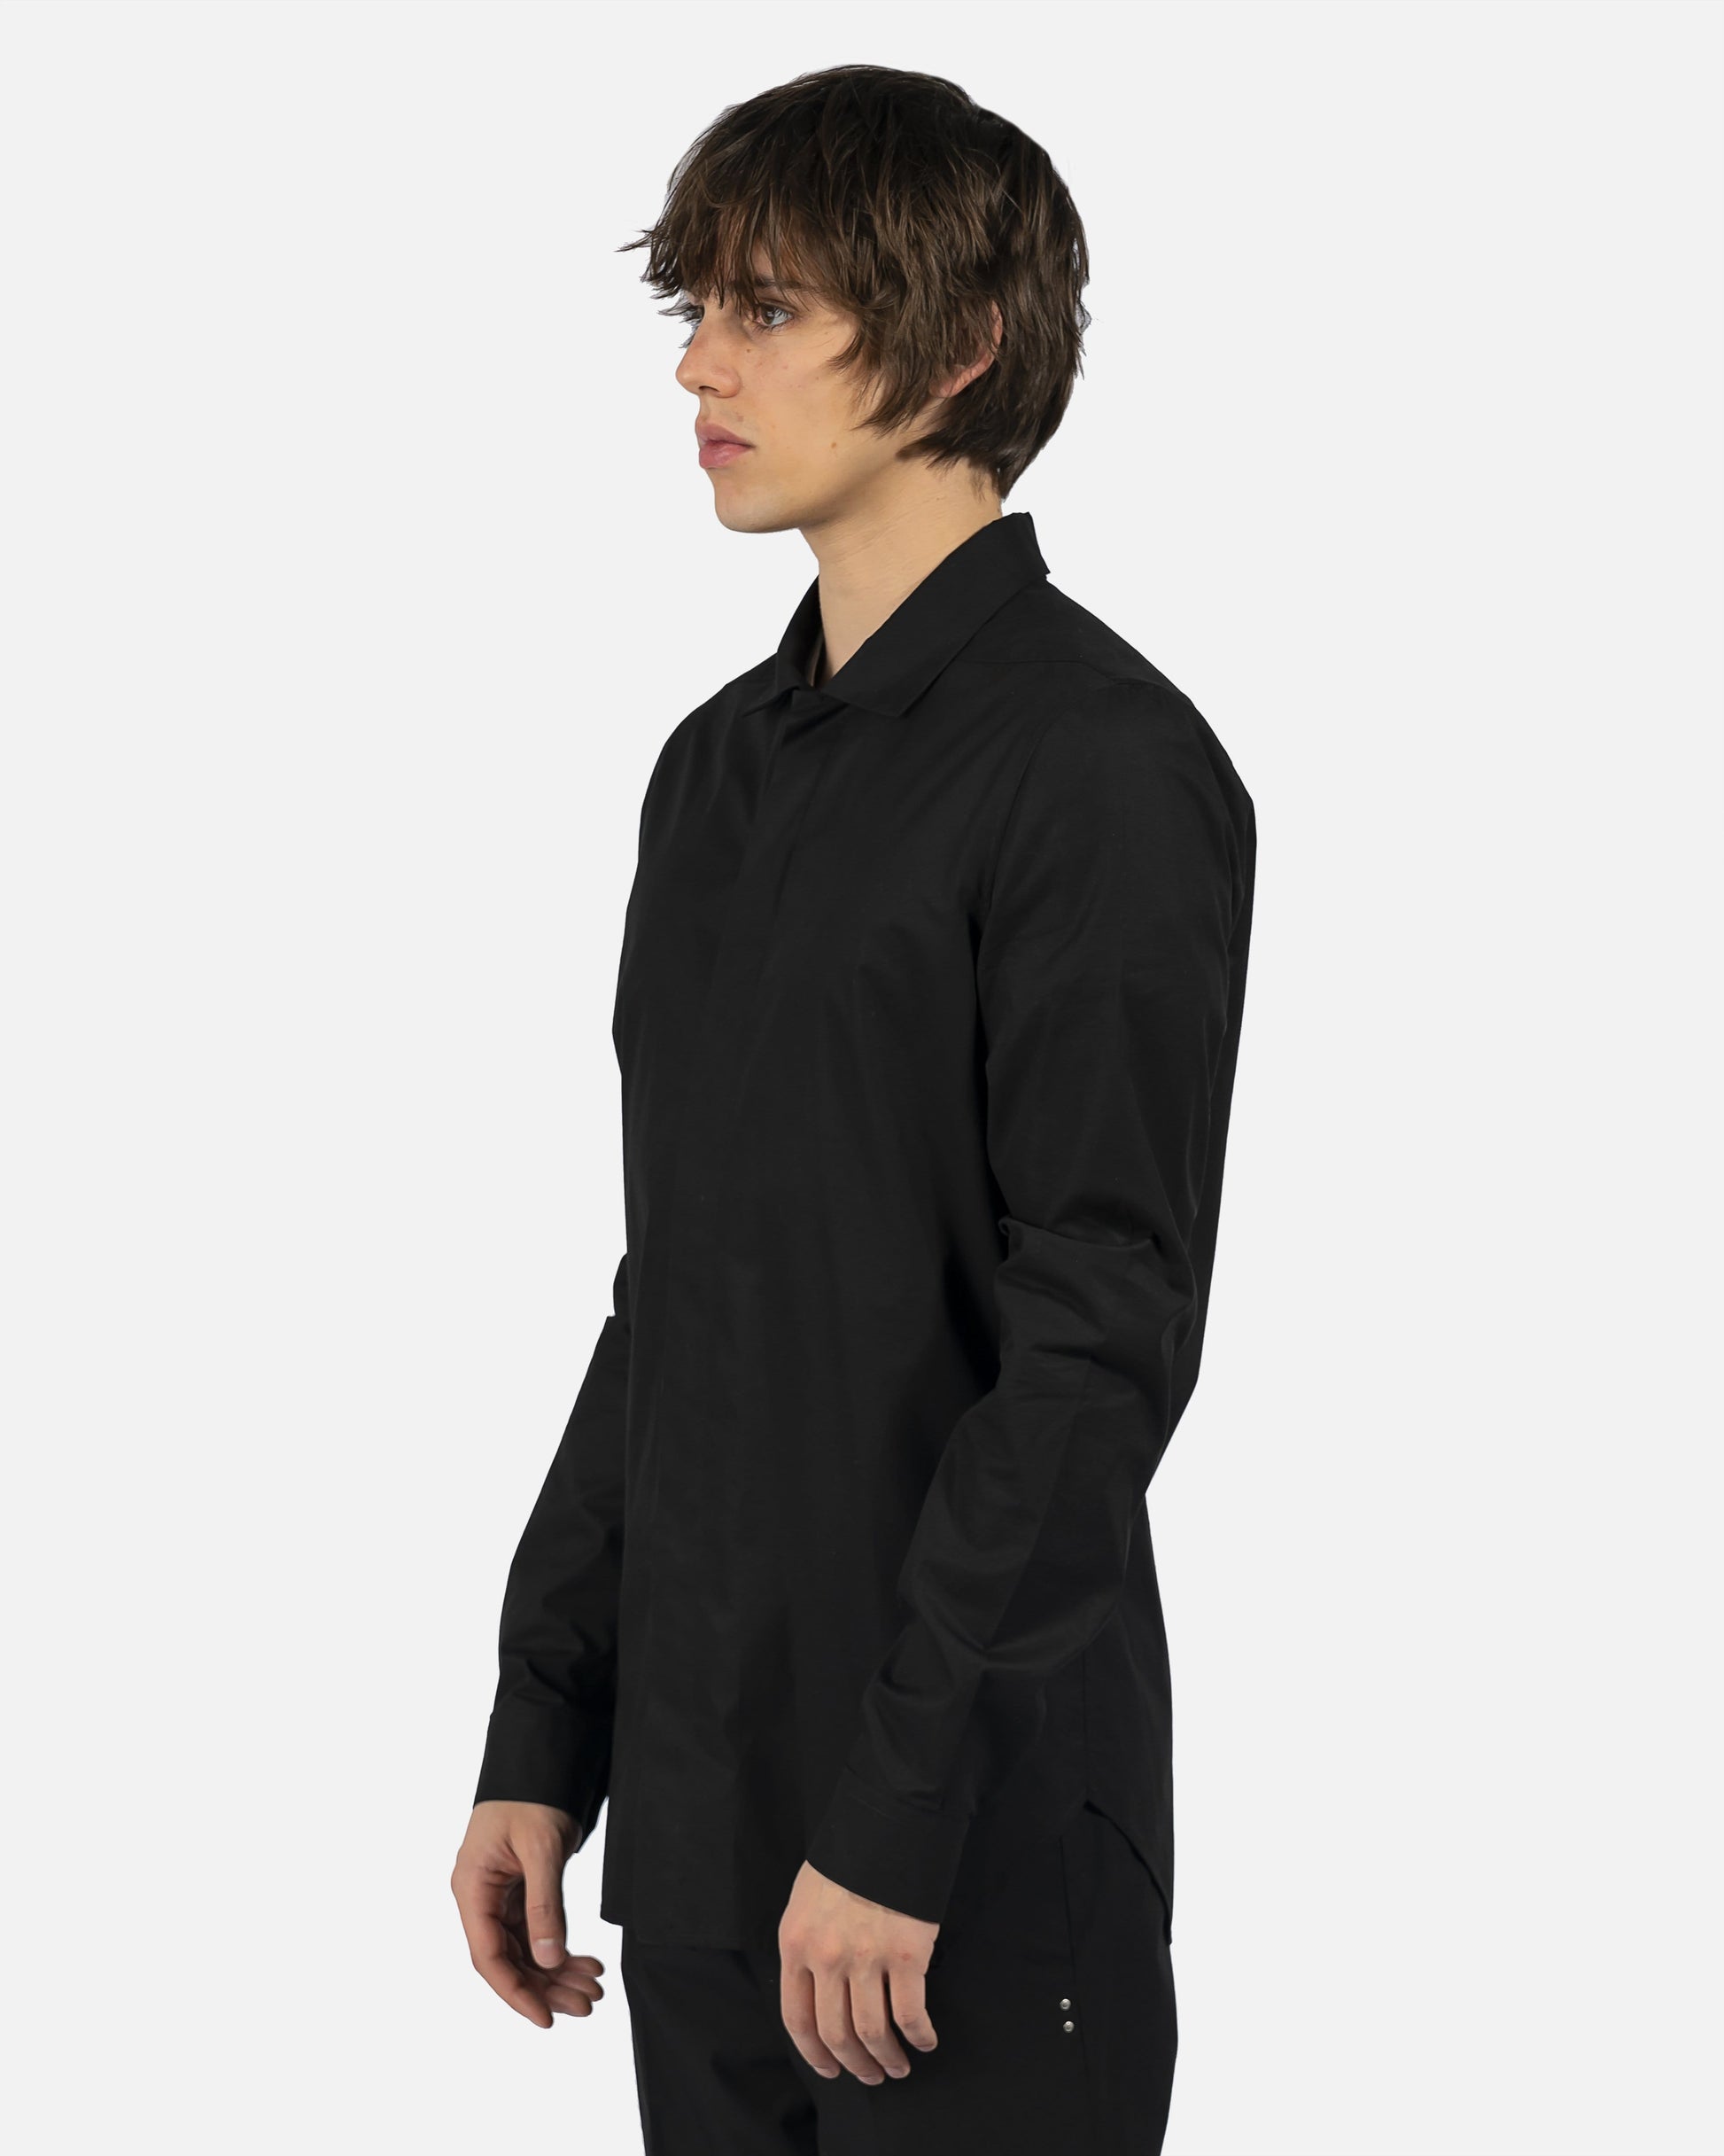 Rick Owens Men's Shirts Office Shirt in Black